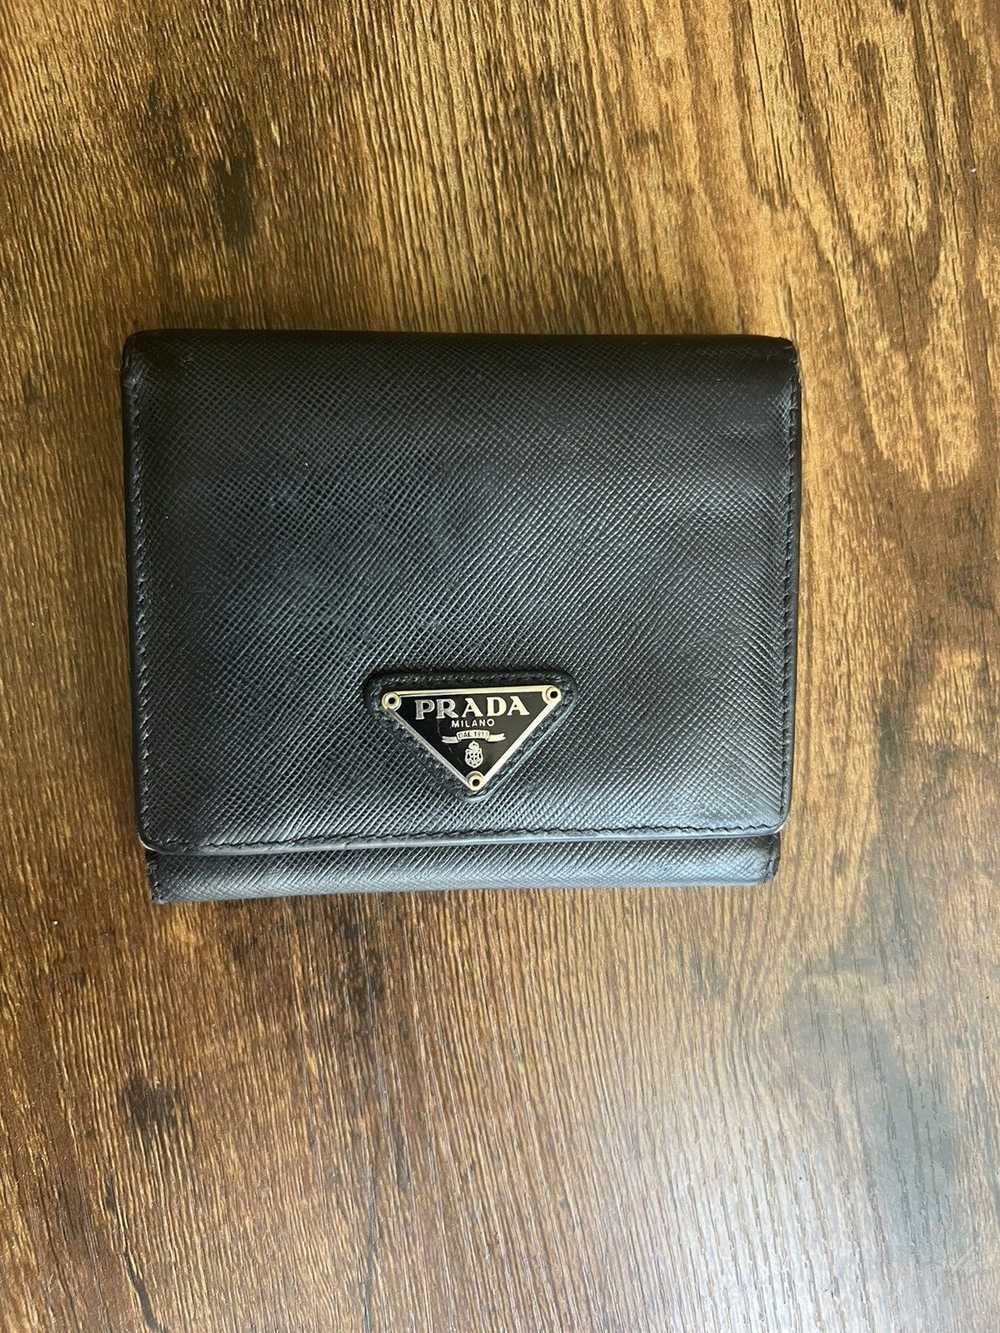 Prada PRADA Leather Tri-Fold Wallet - image 2